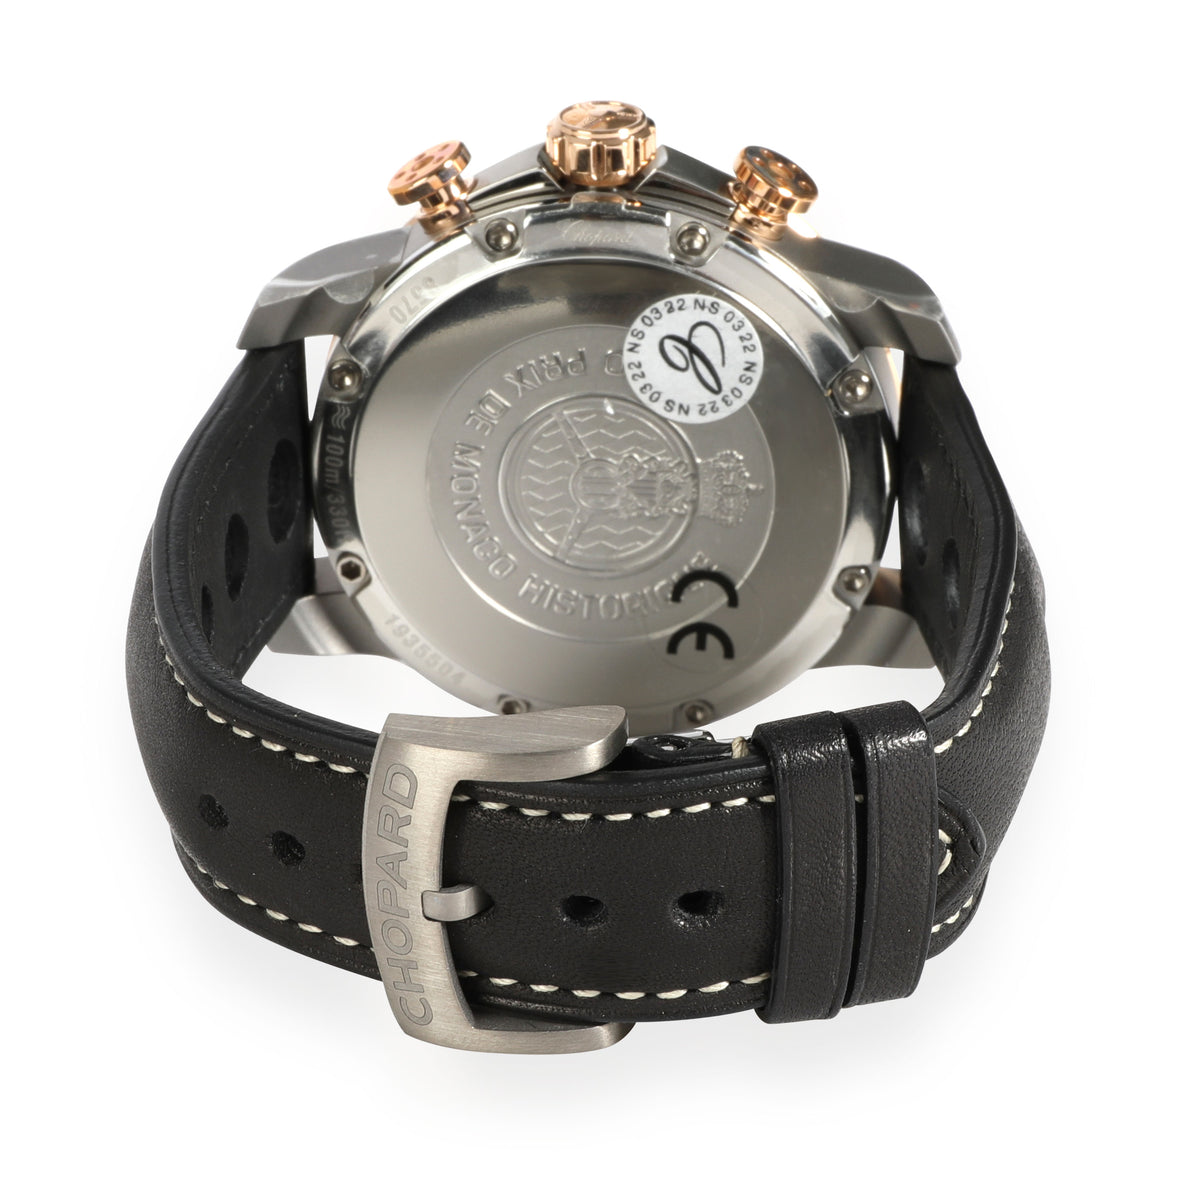 Chopard Grand Prix de Monaco Historique 168570-9001 Men's Watch in 